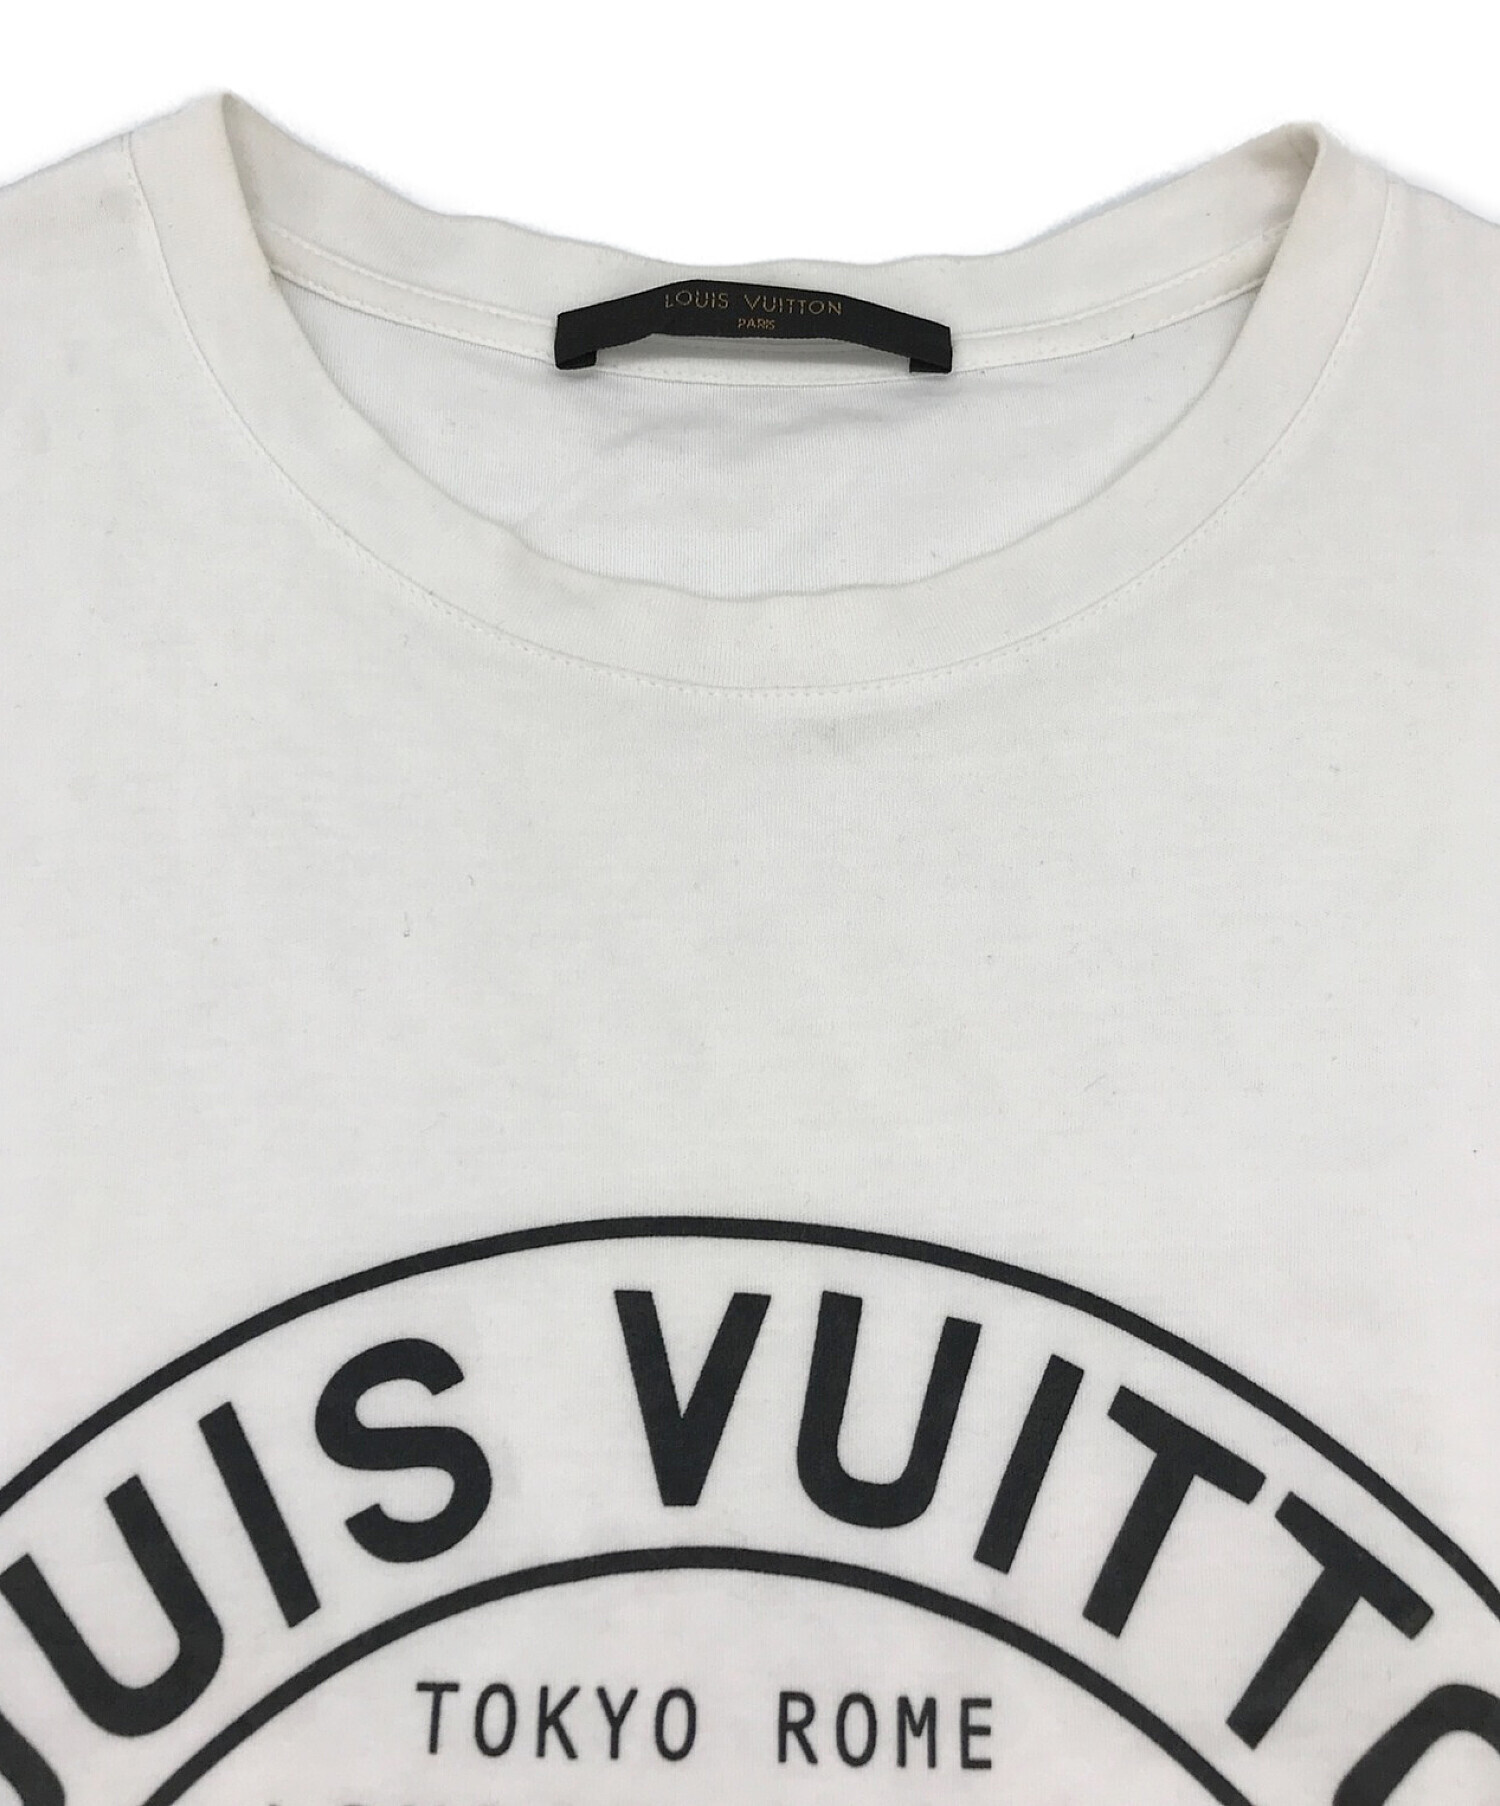 LOUIS VUITTON (ルイ ヴィトン) サークルロゴTシャツ ホワイト×ネイビー サイズ:S